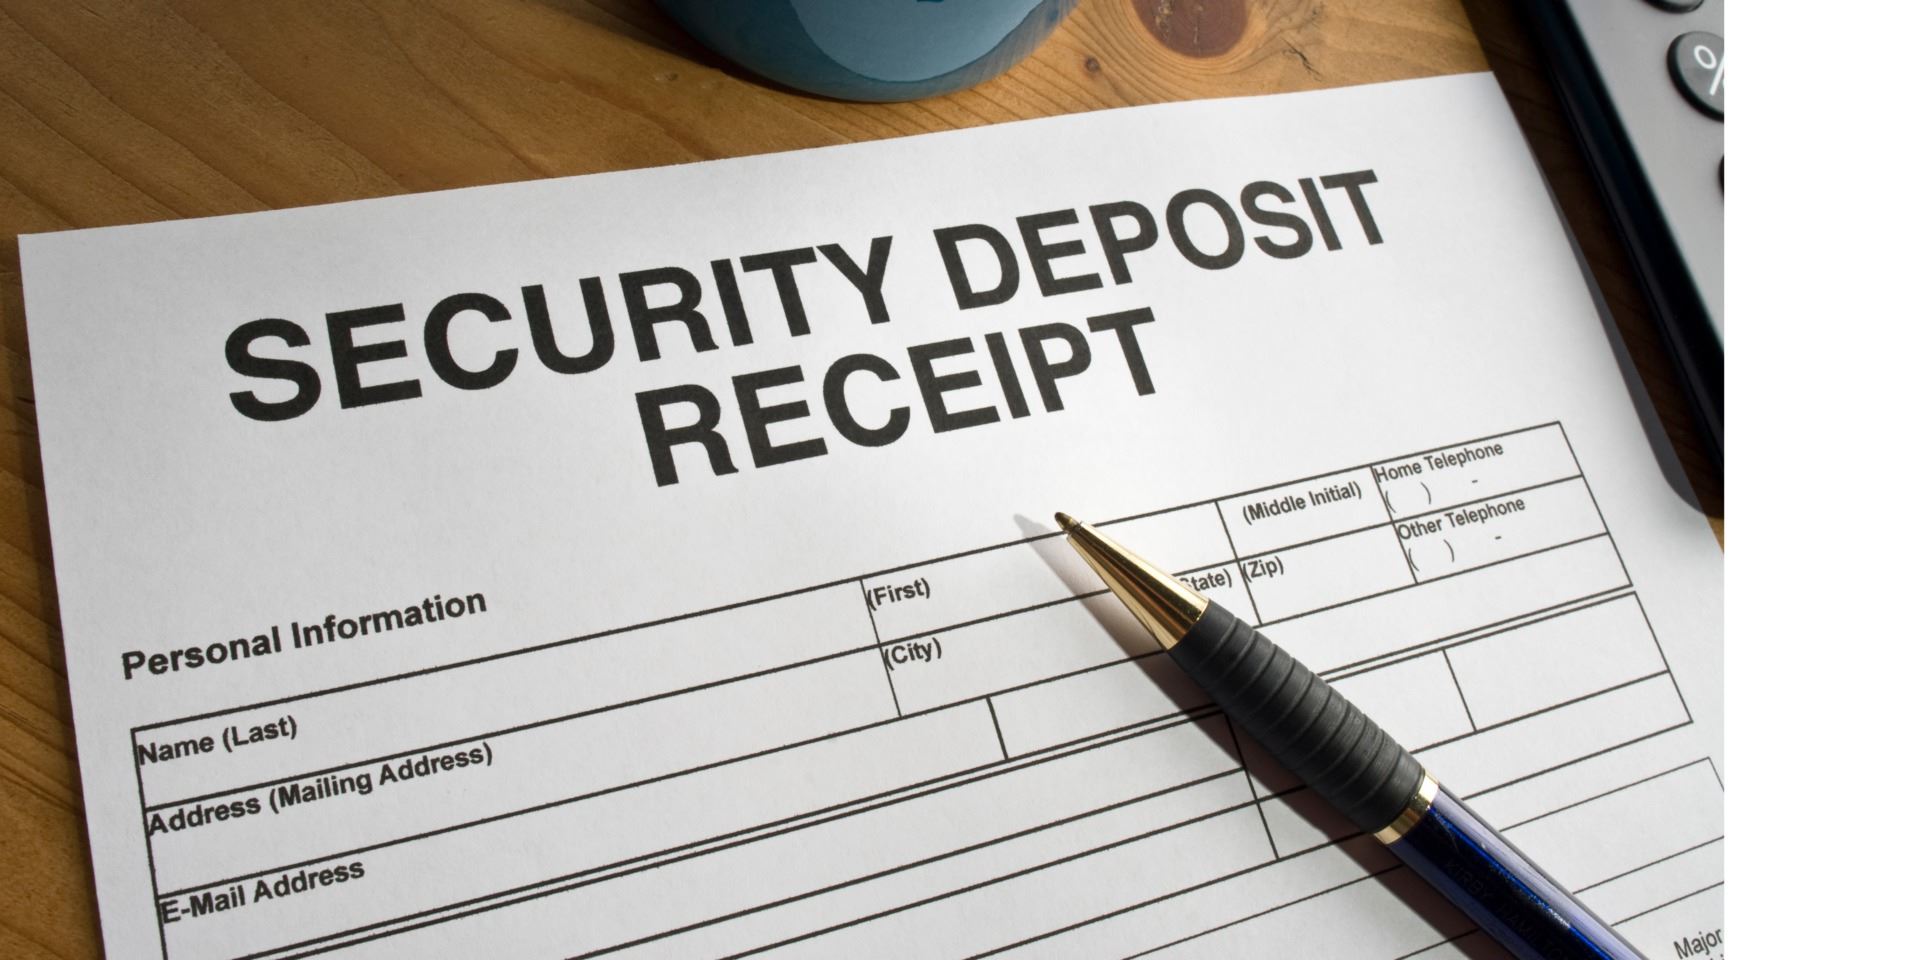 Paperwork for a security deposit receipt